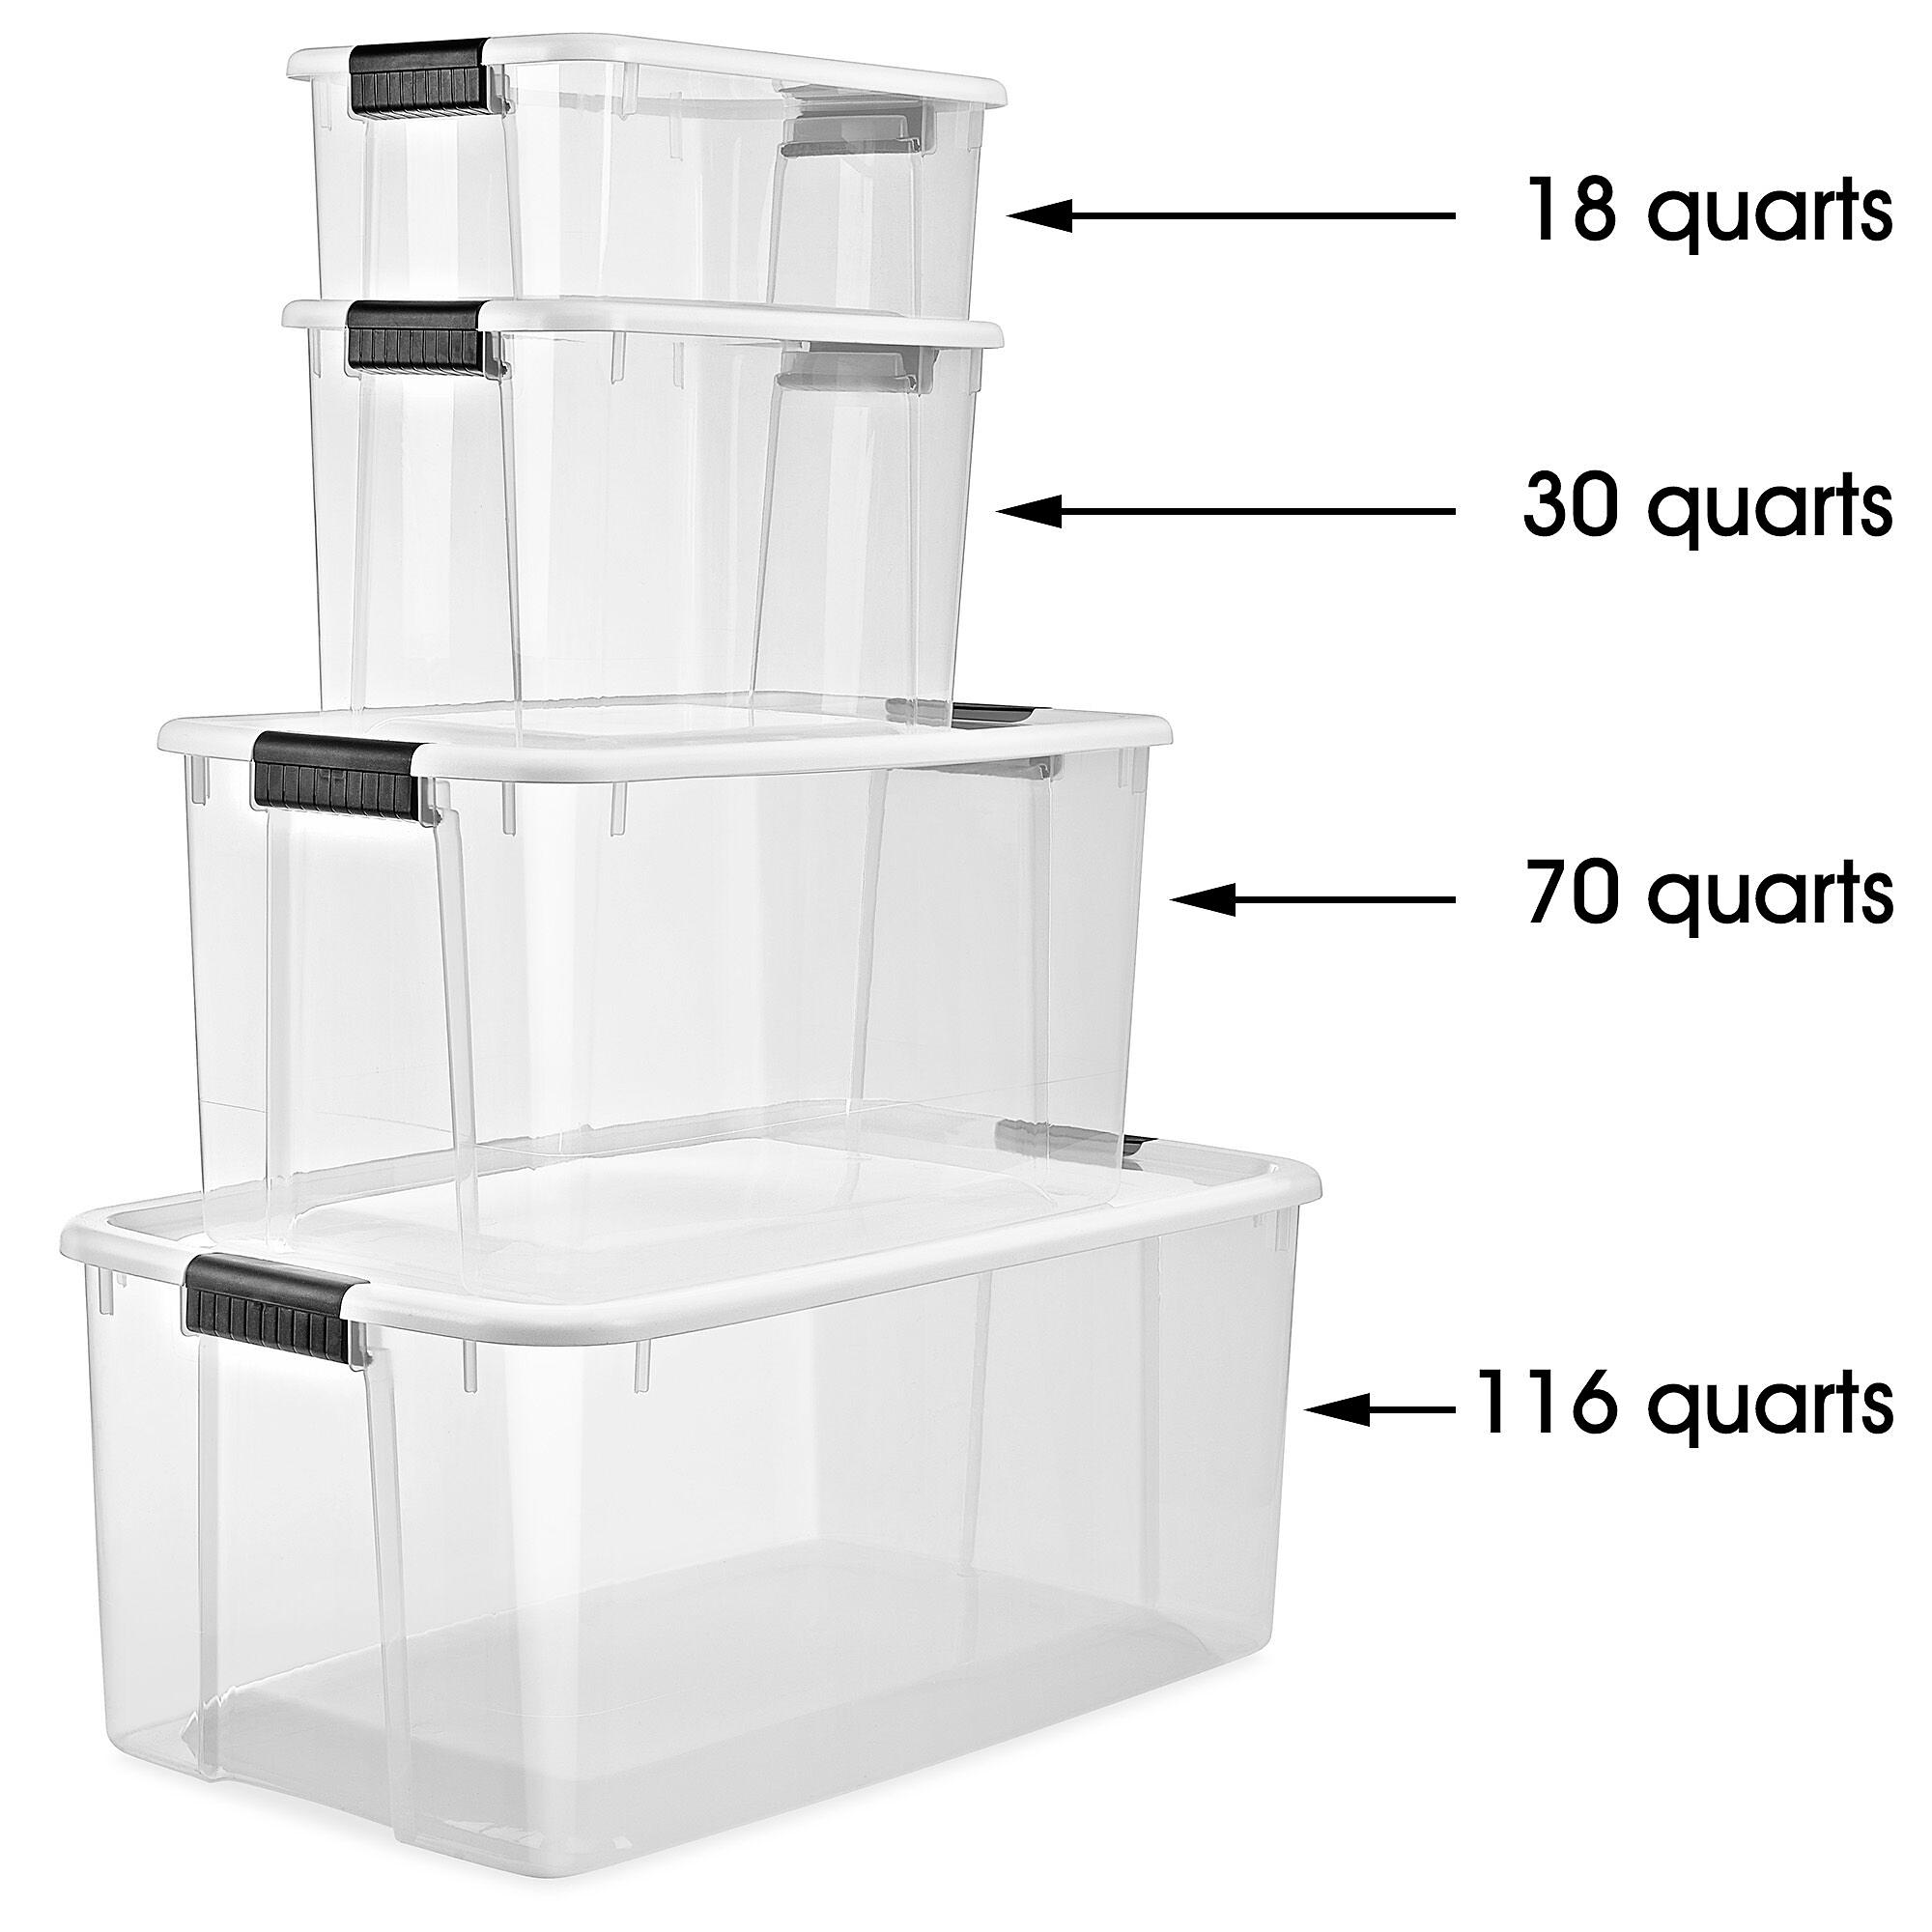 Clear Storage Boxes - 18 x 12 x 12